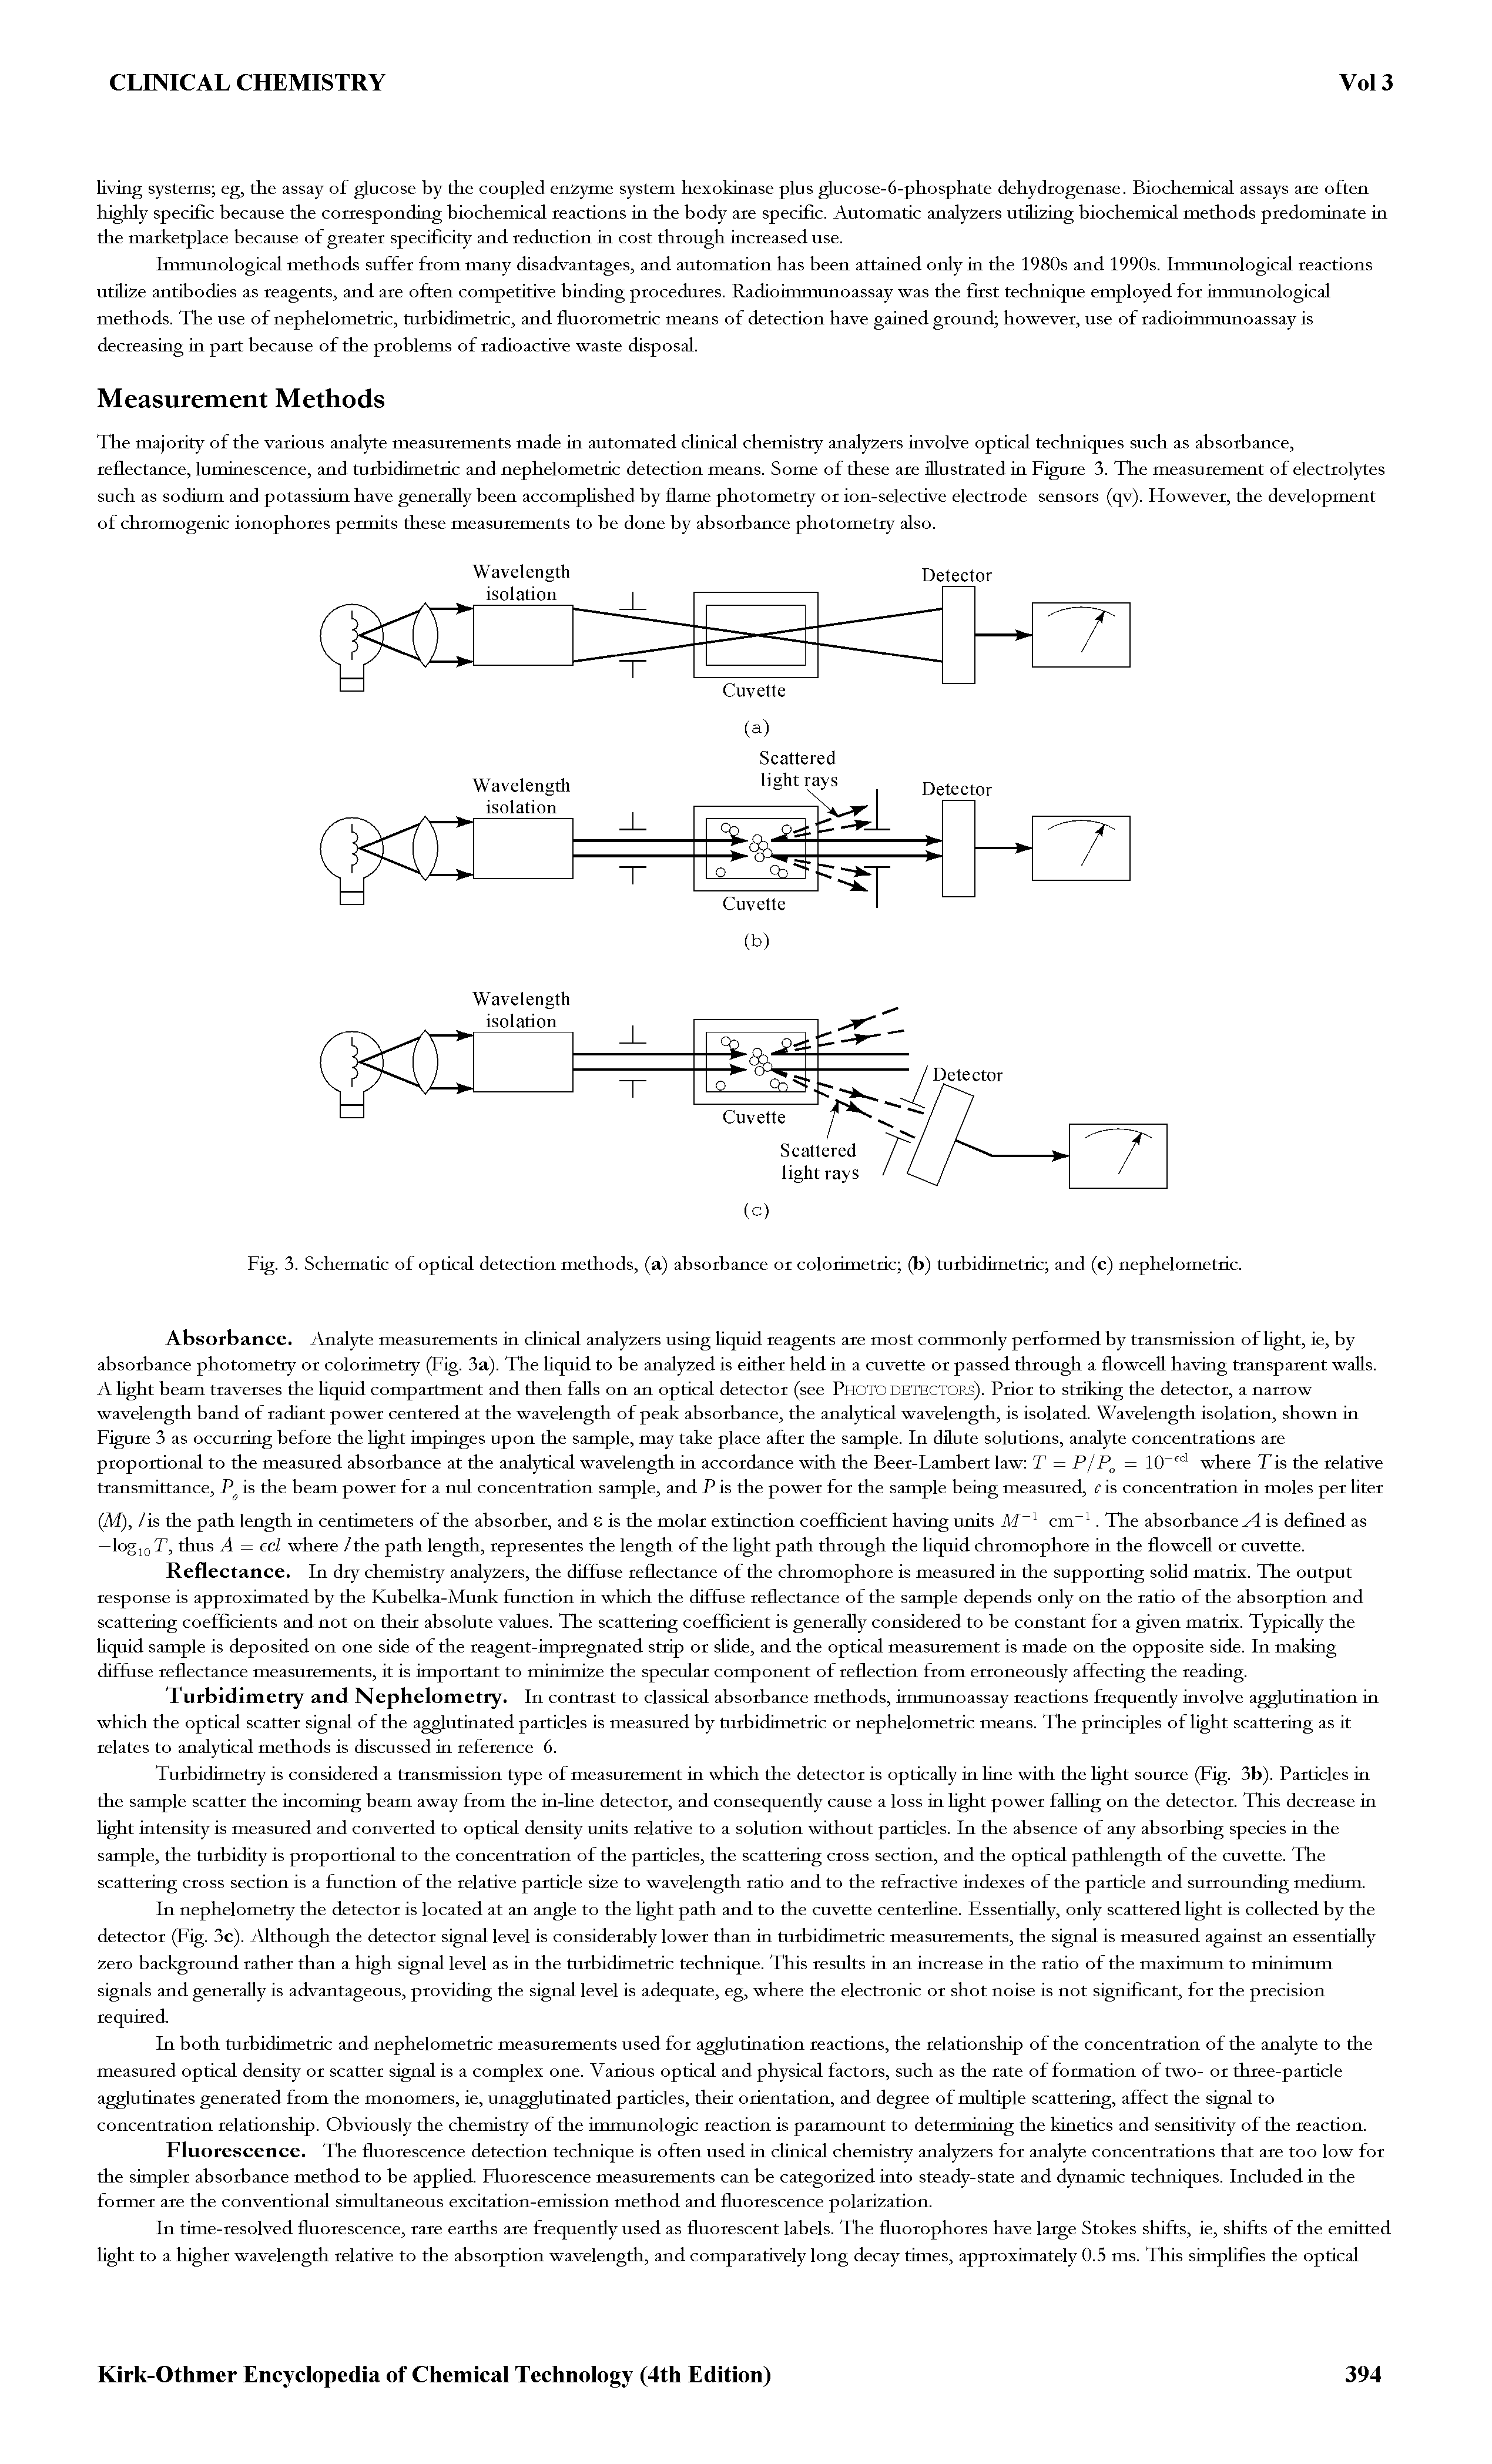 Fig. 3. Schematic of optical detection methods, (a) absorbance or colorimetric (b) turbidimetric and (c) nephelometric.